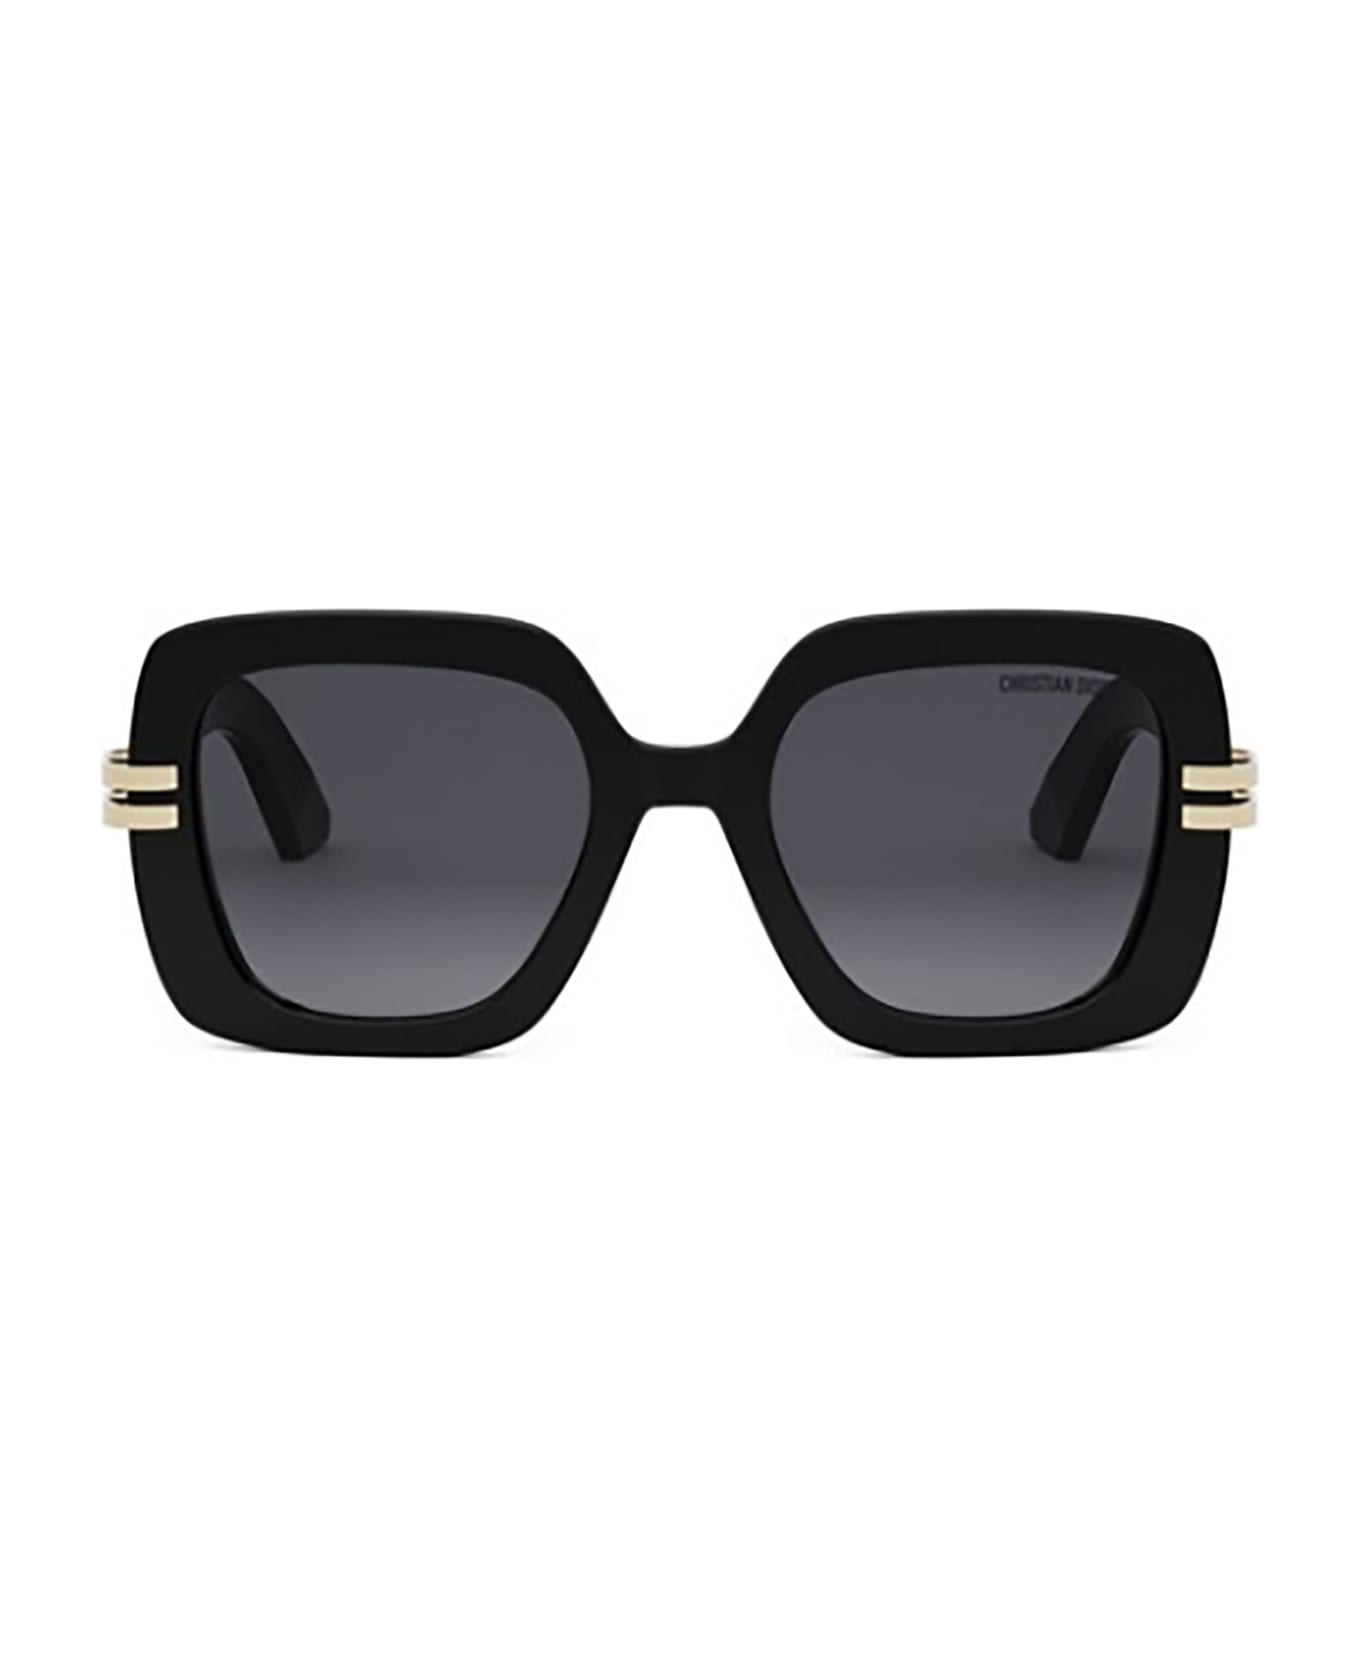 Dior CDIOR S2I Sunglasses サングラス